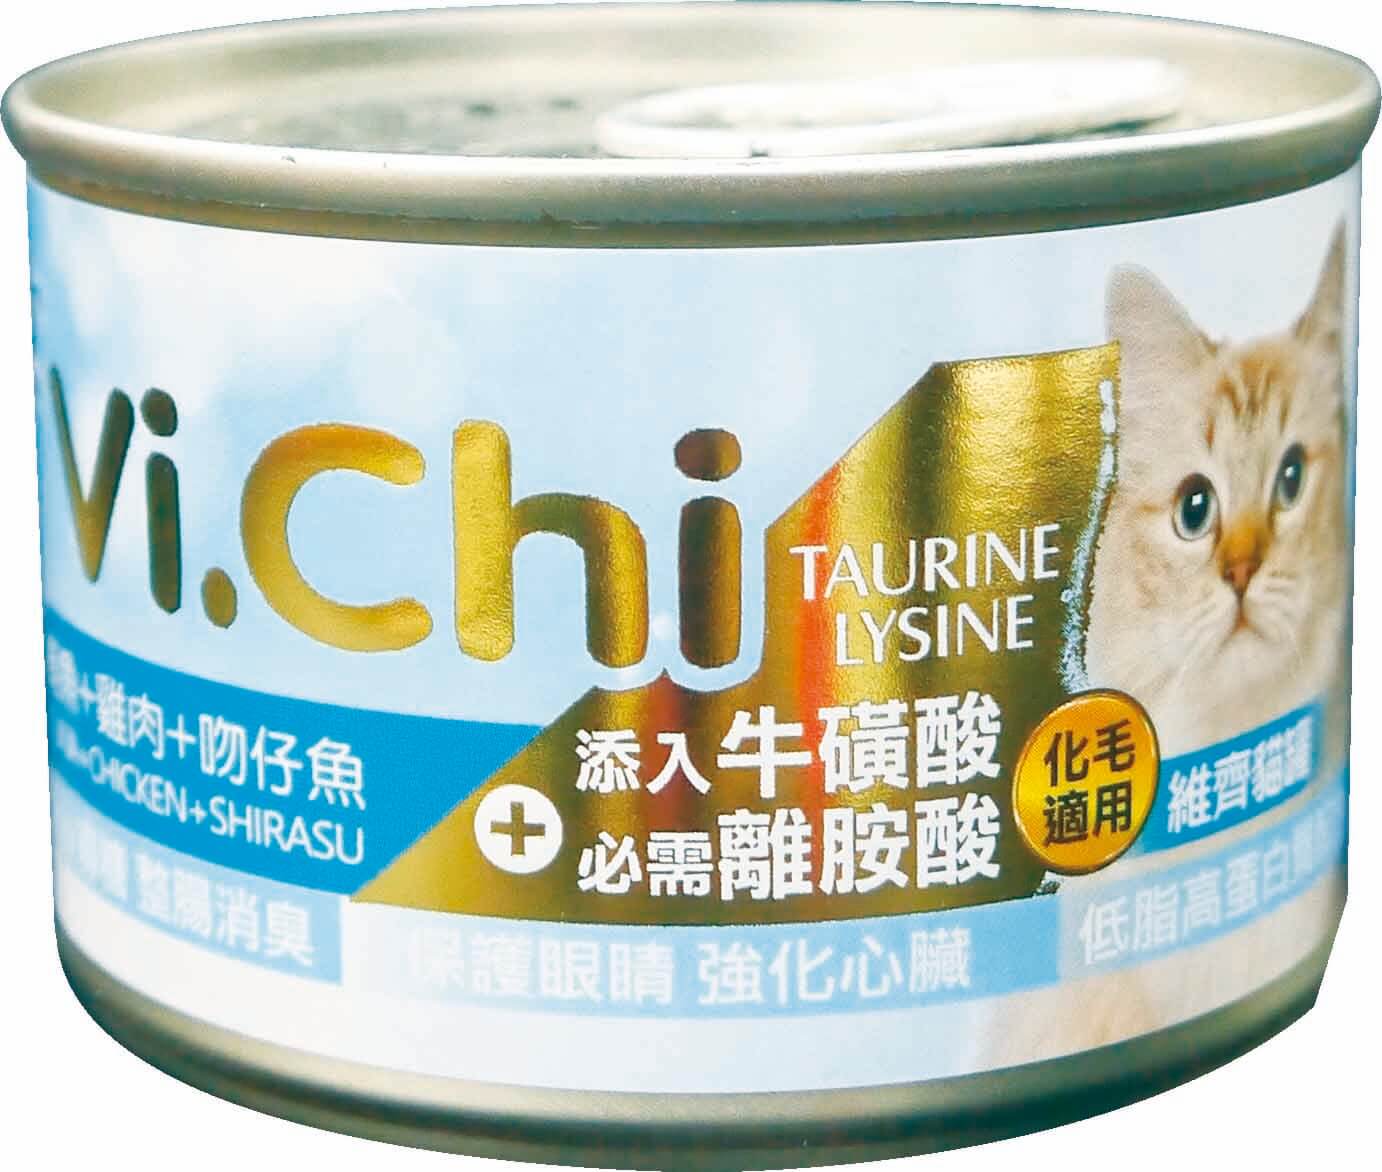 維齊貓罐160G-鮪魚+雞肉+吻仔魚
Vi.Chi cat can-tuna+chicken+shirasu